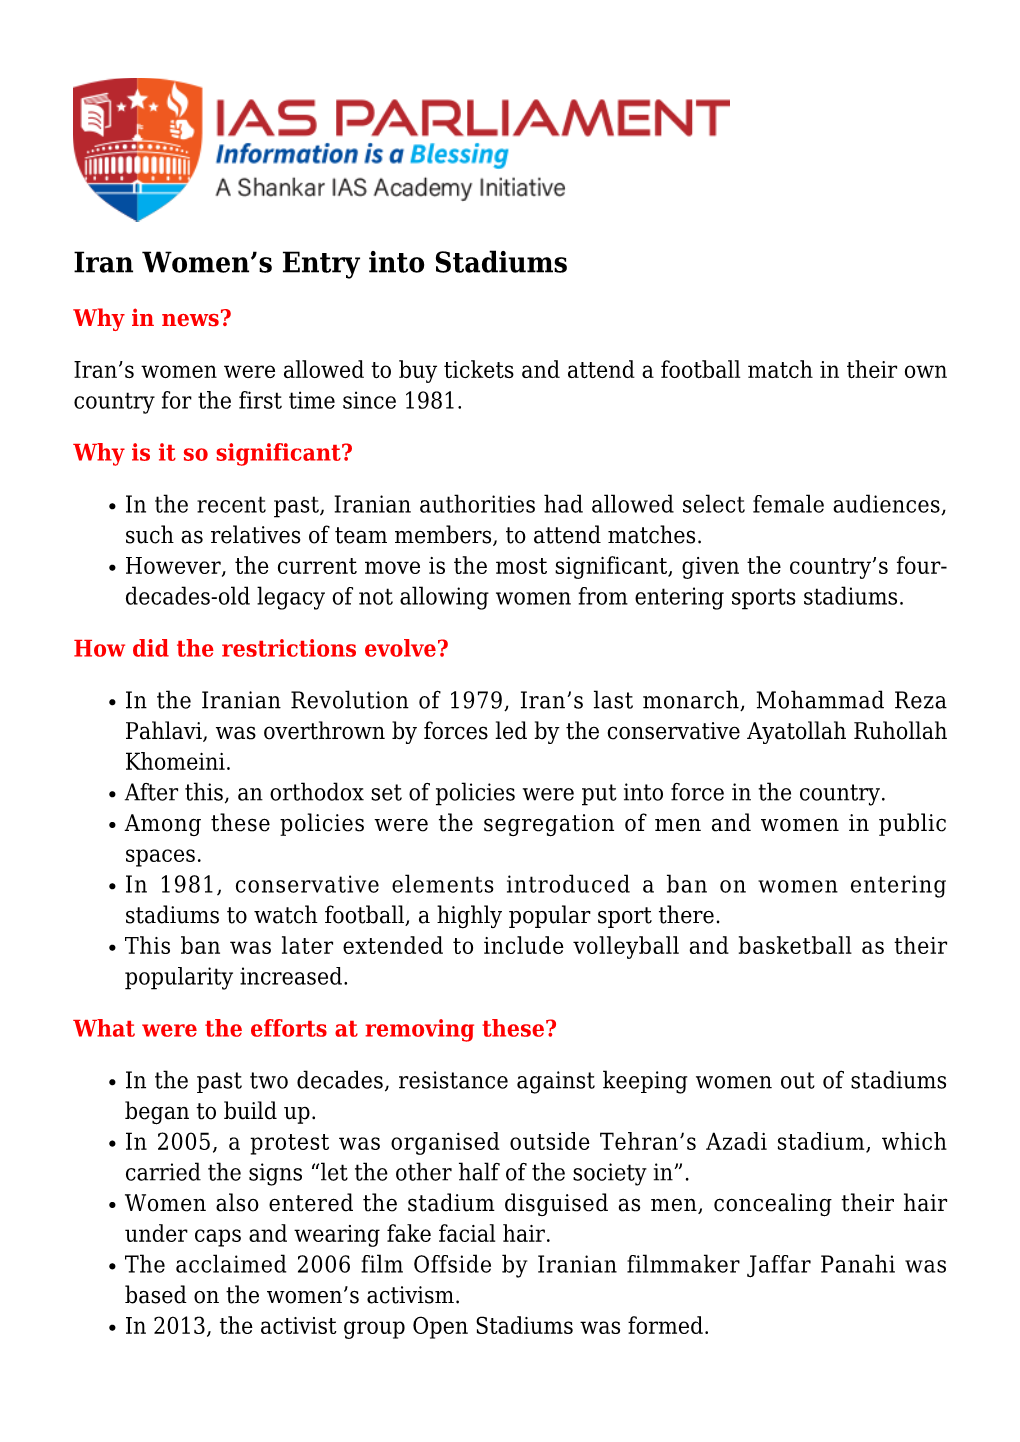 Iran Women's Entry Into Stadiums